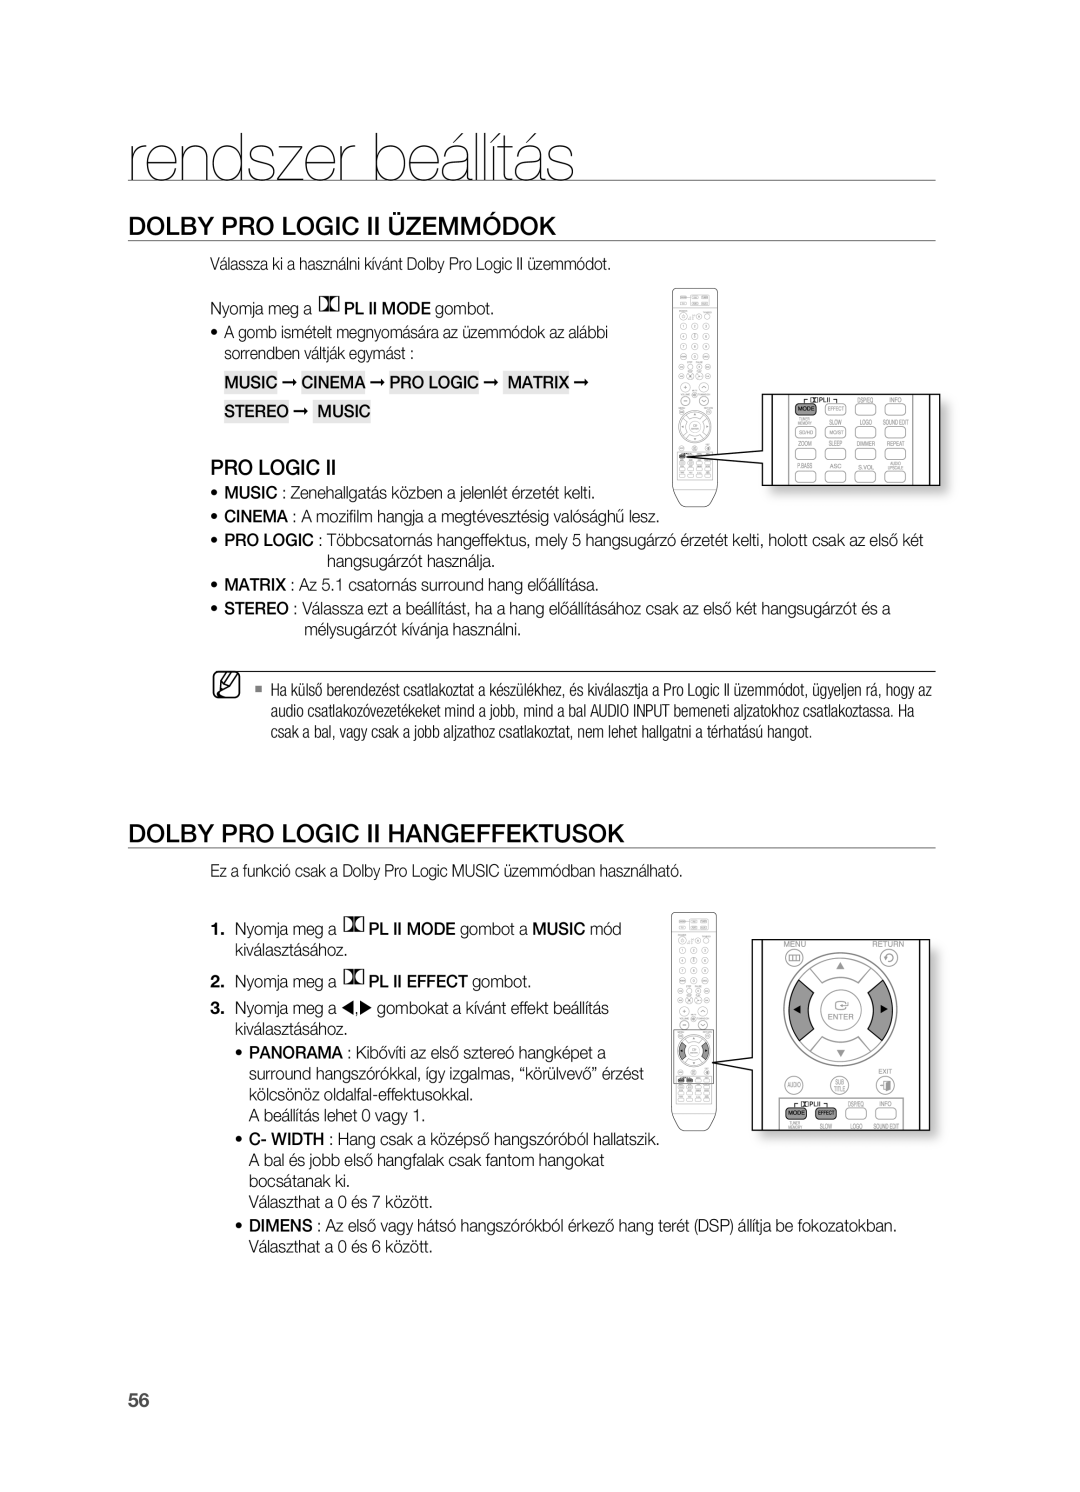 Samsung HT-TX715T/EDC, HT-X715T/EDC manual Dolby pRO Logic II ÜzEMMóDOK, Dolby pRO Logic II Hangeffektusok, Stereo Music 